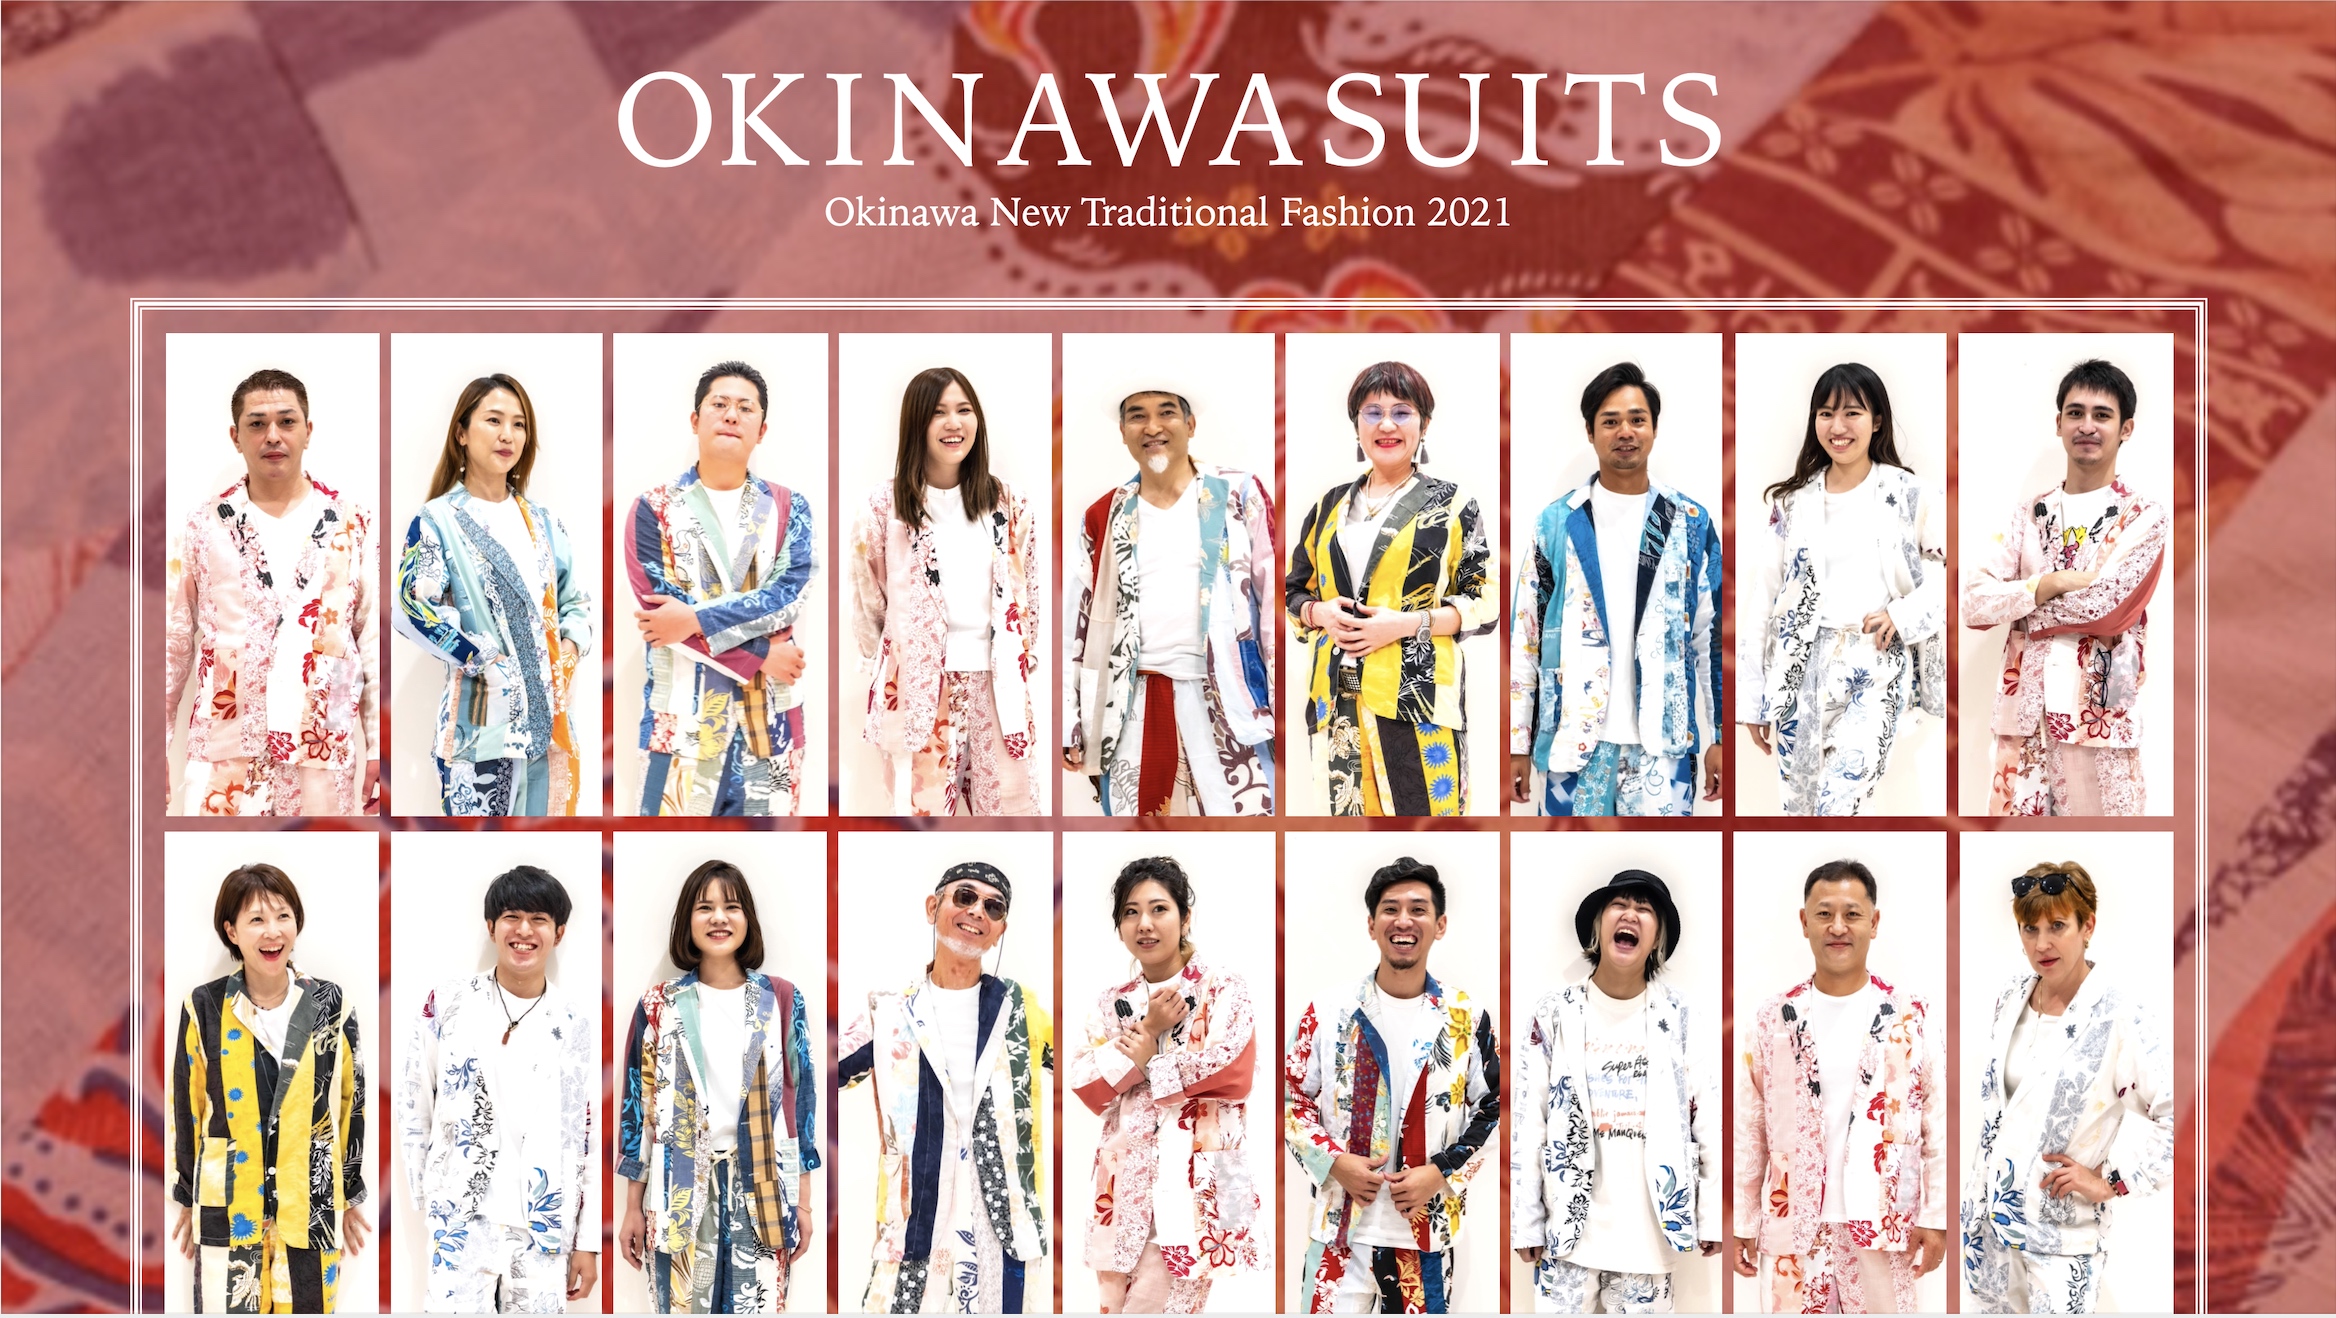 OKINAWA SUITS